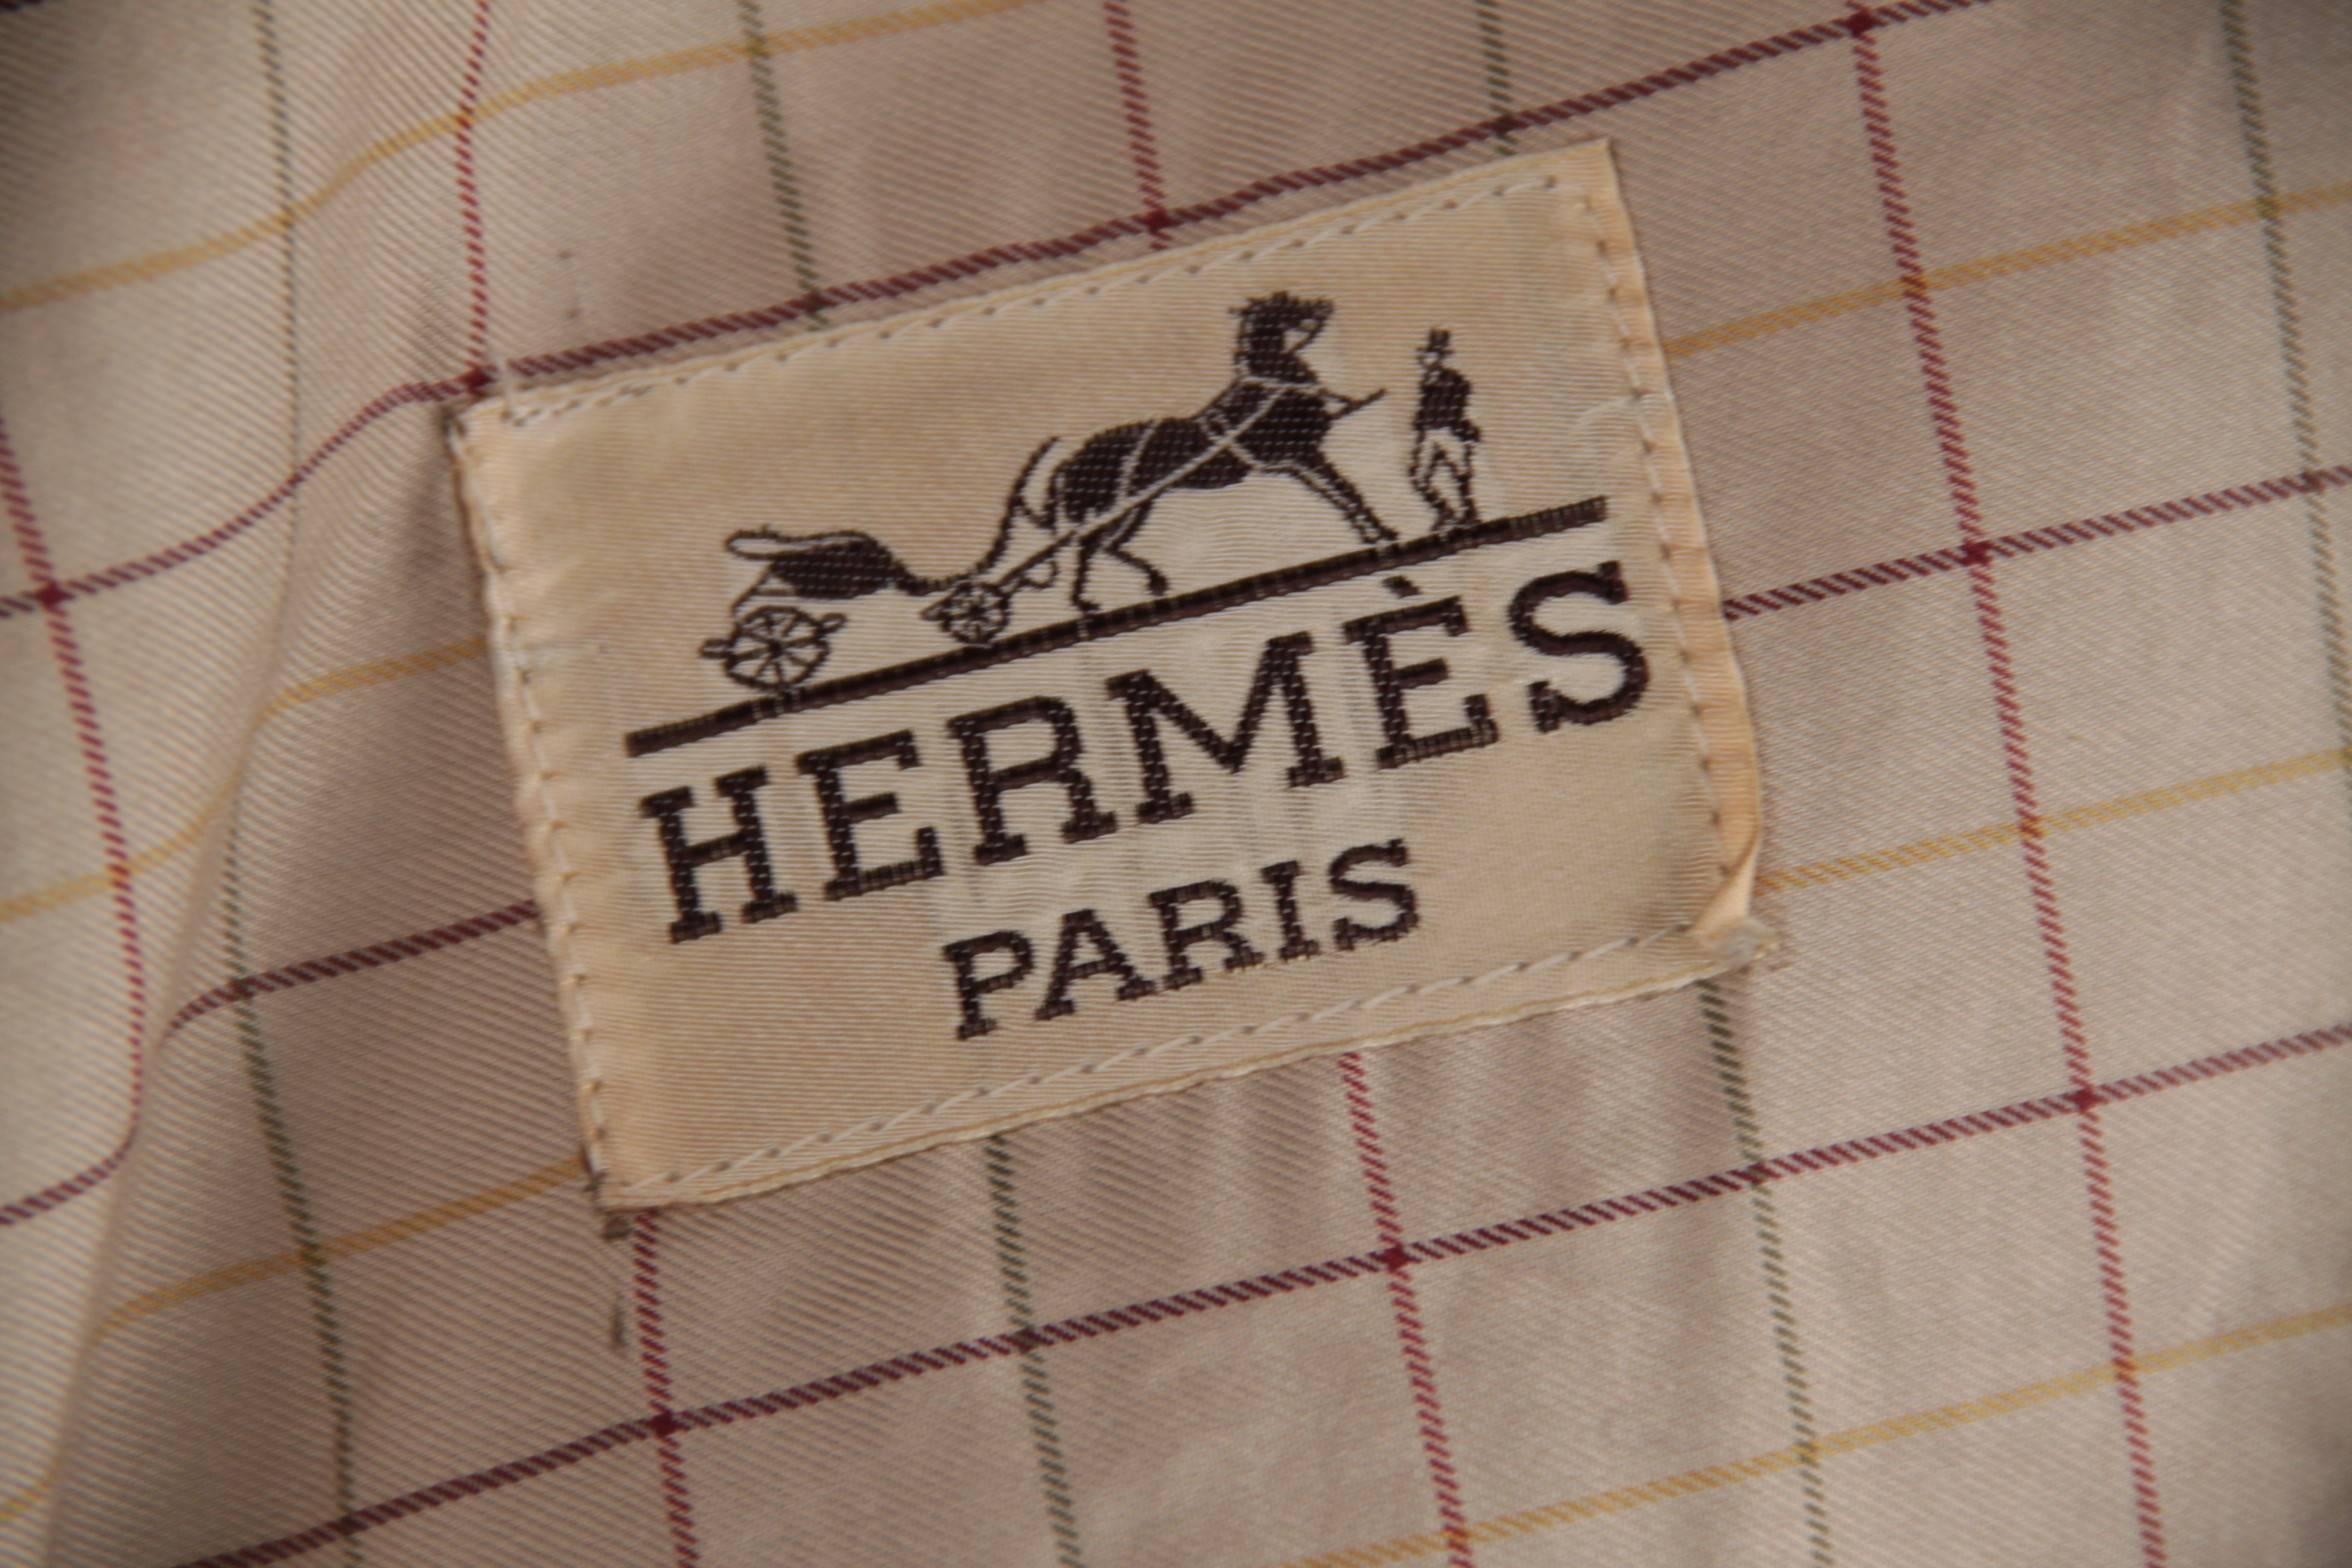 HERMES PARIS Vintage Beige Cotton MACKINTOSH COAT Mac Mack RAINCOAT Sz 40  2